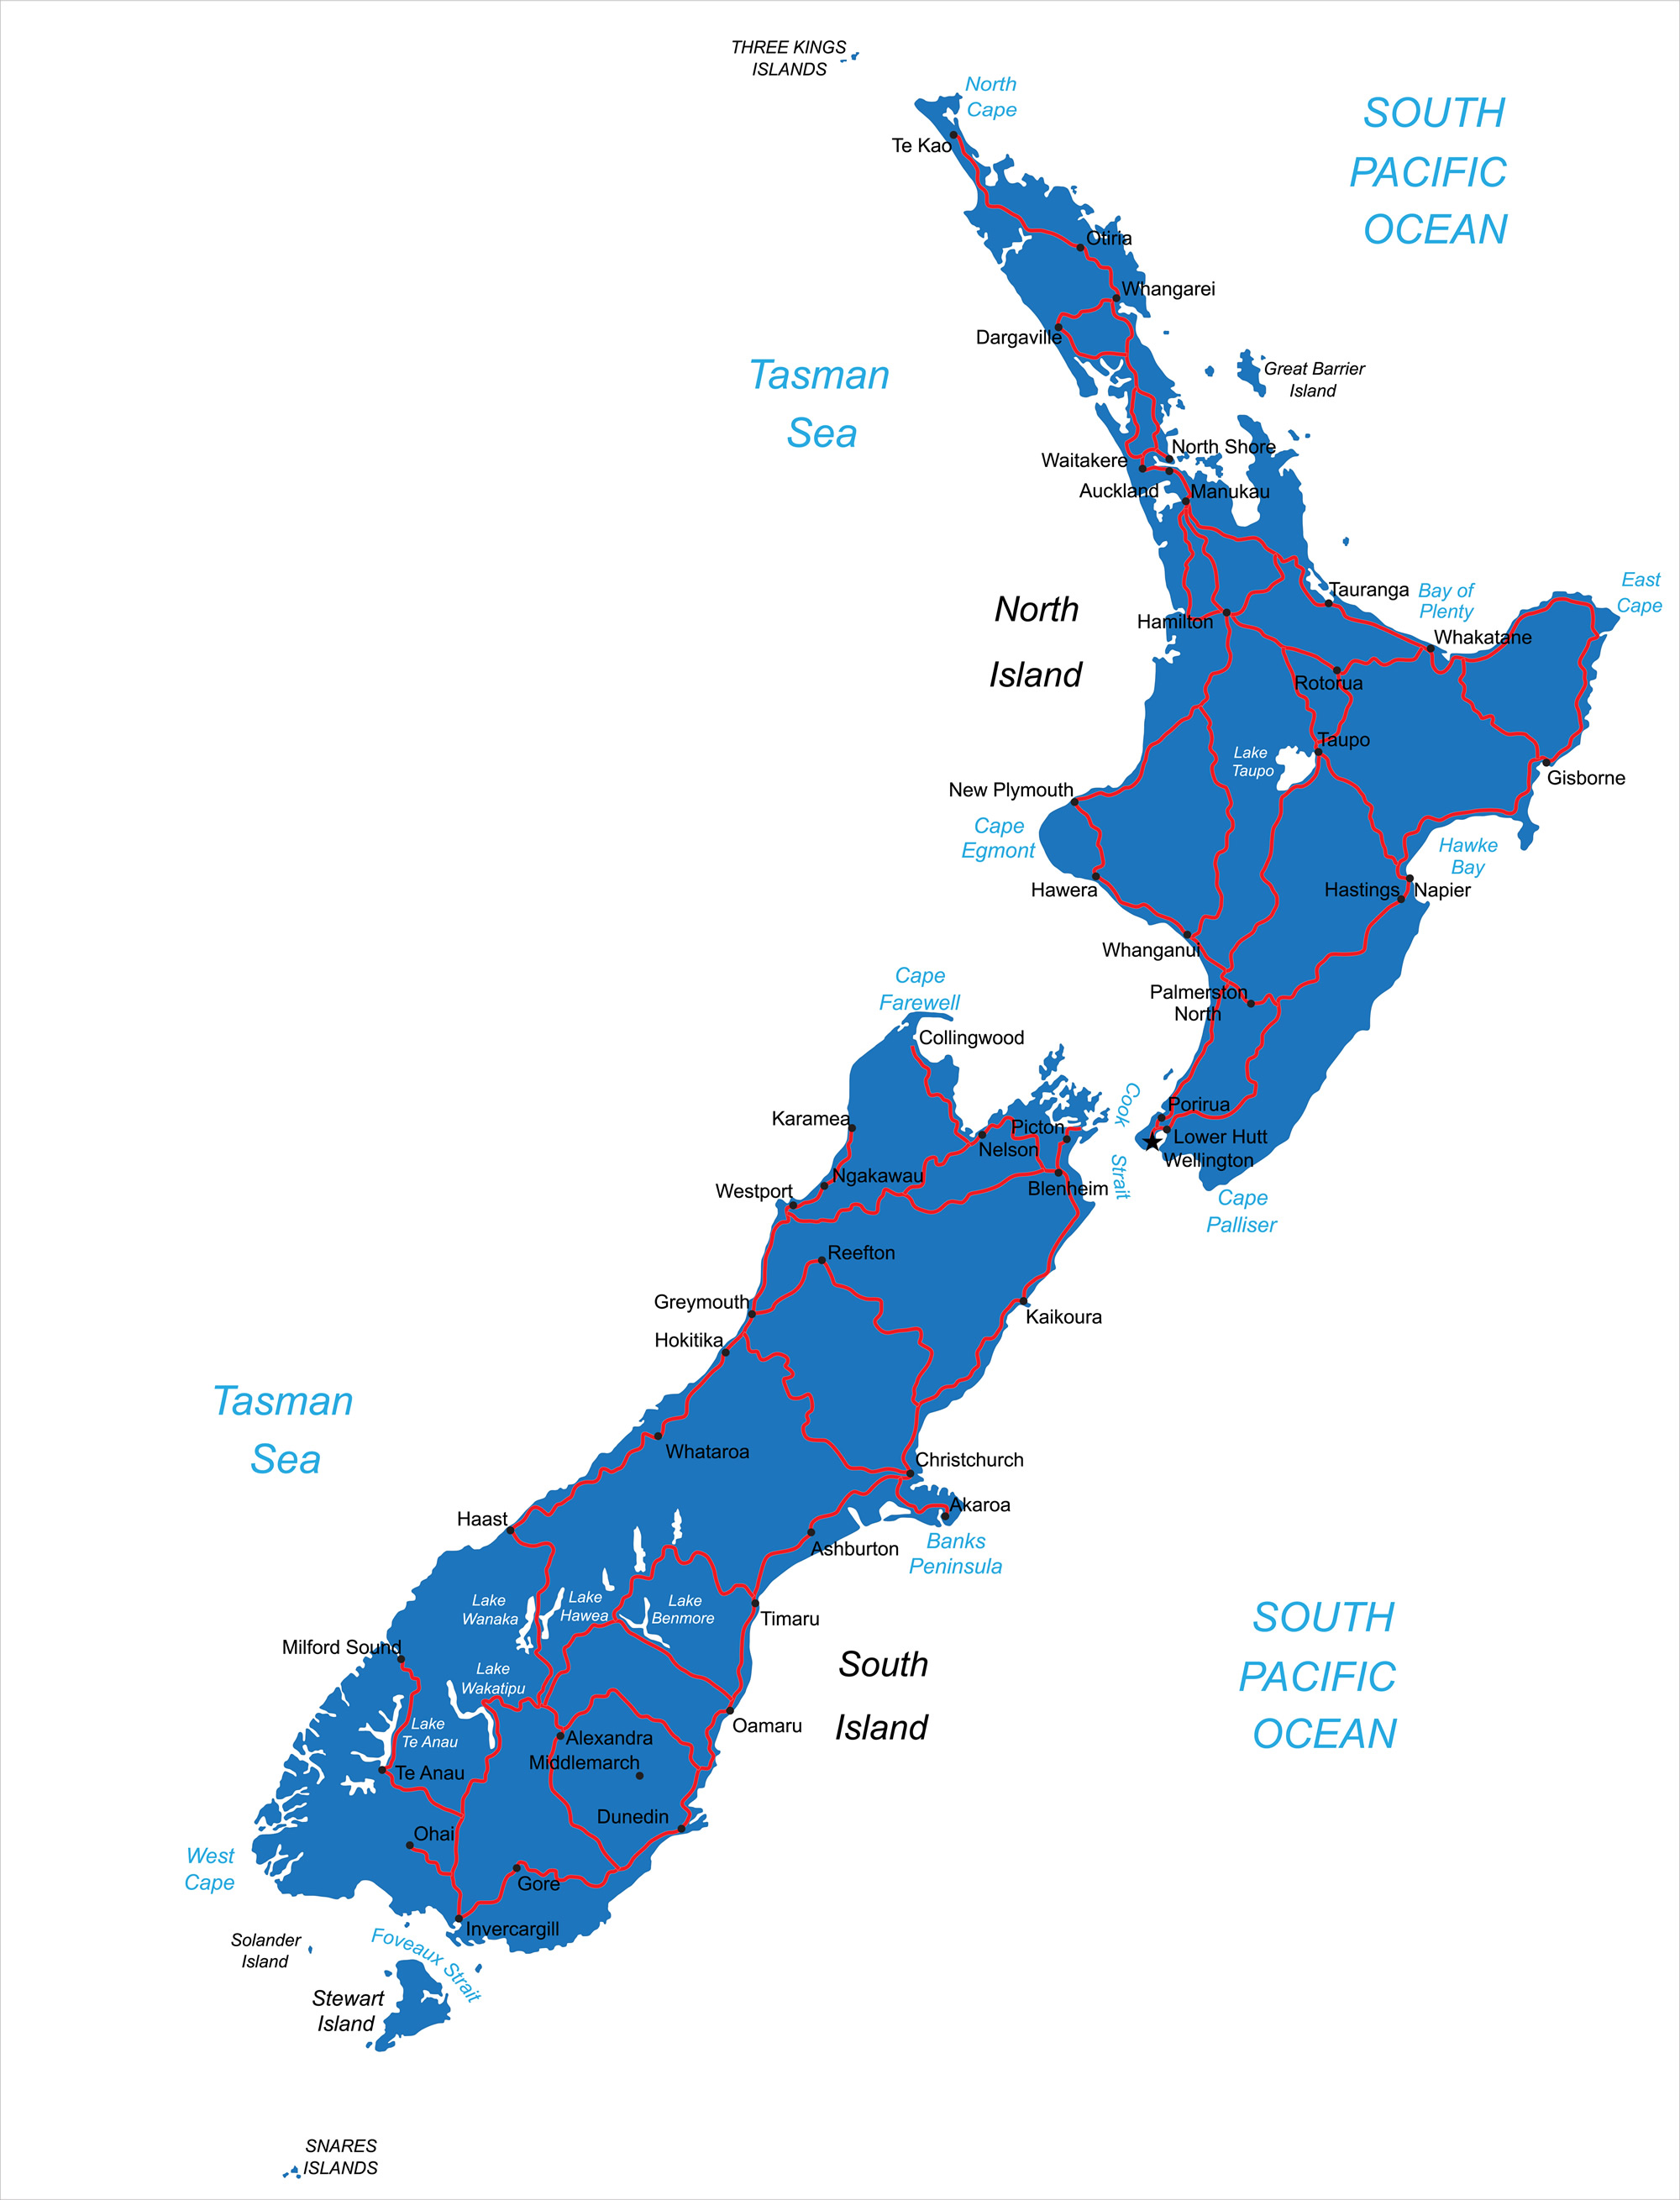 New Zealand Road Map